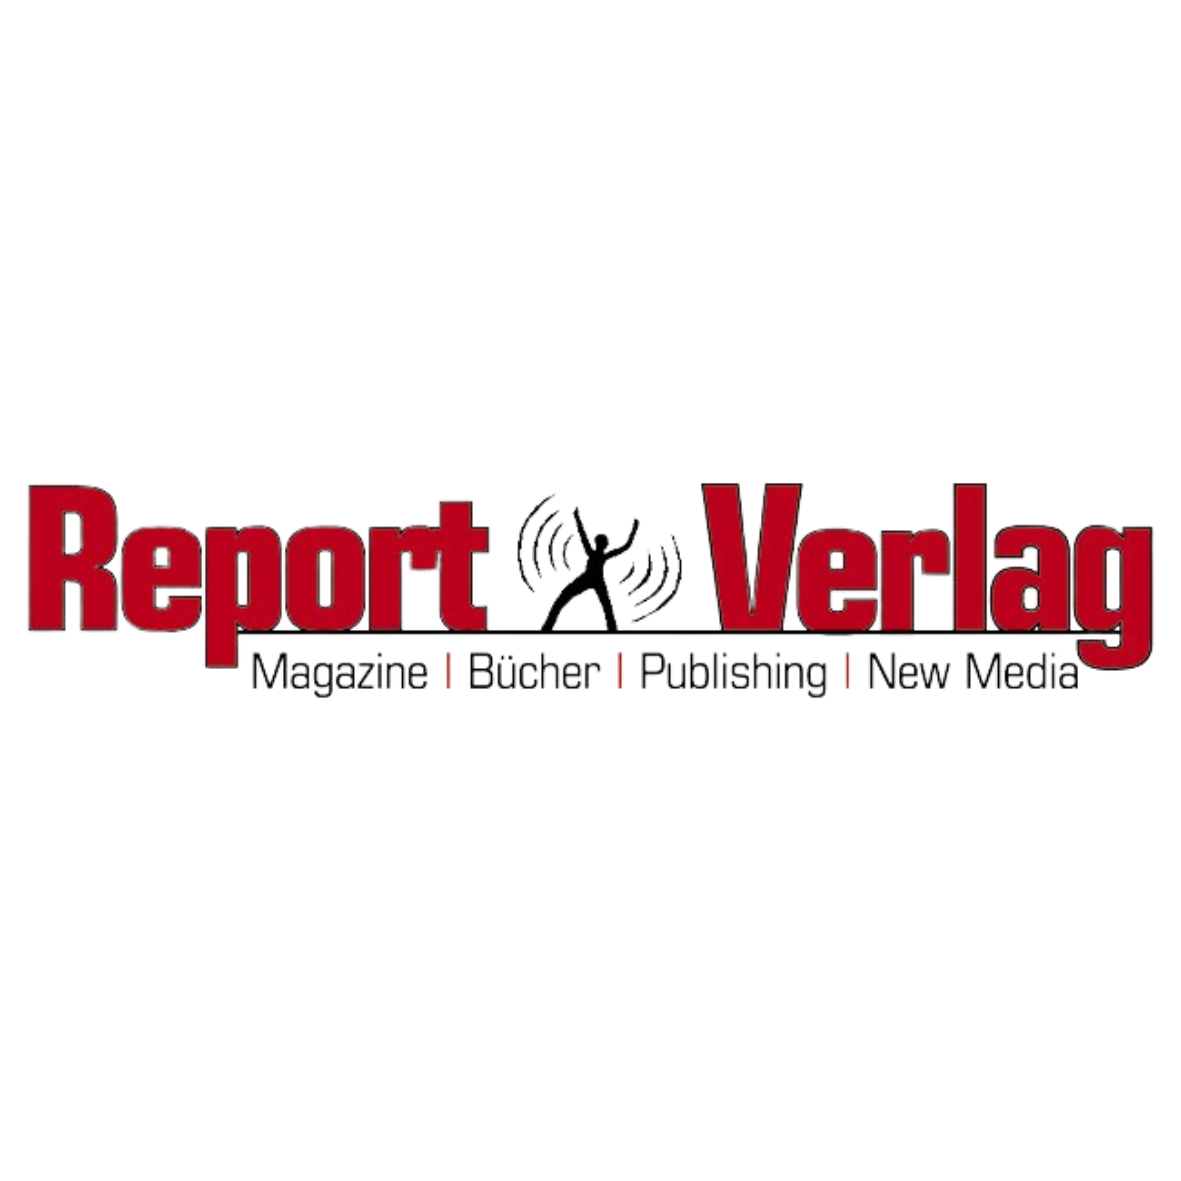 Logo Report Verlag